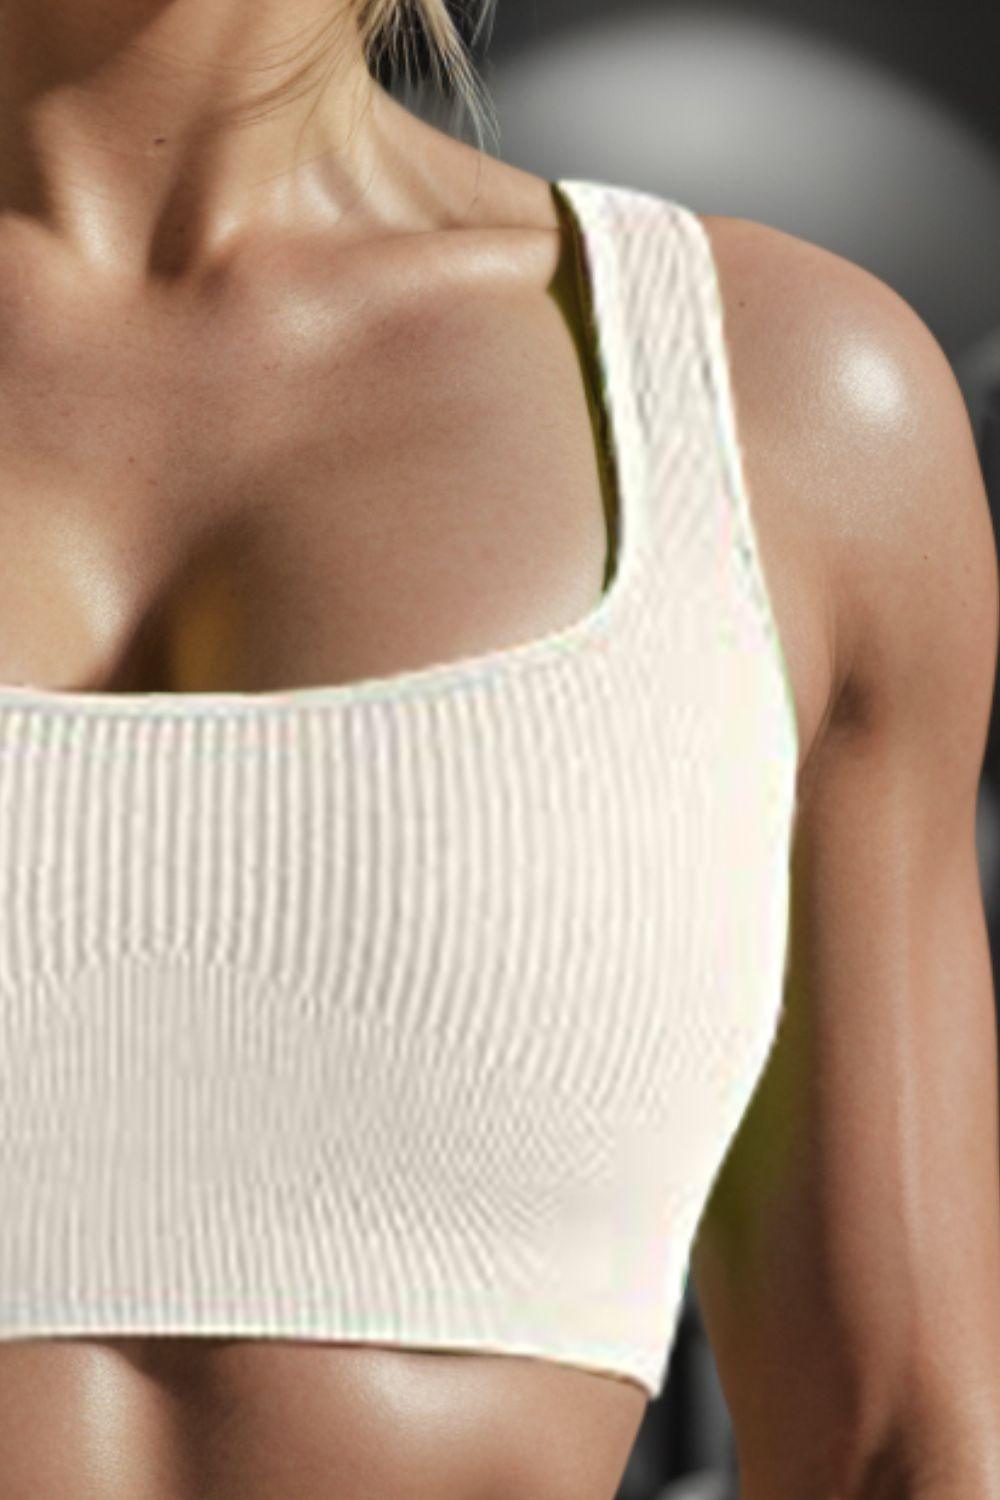 a woman in a sports bra top holding a tennis racquet